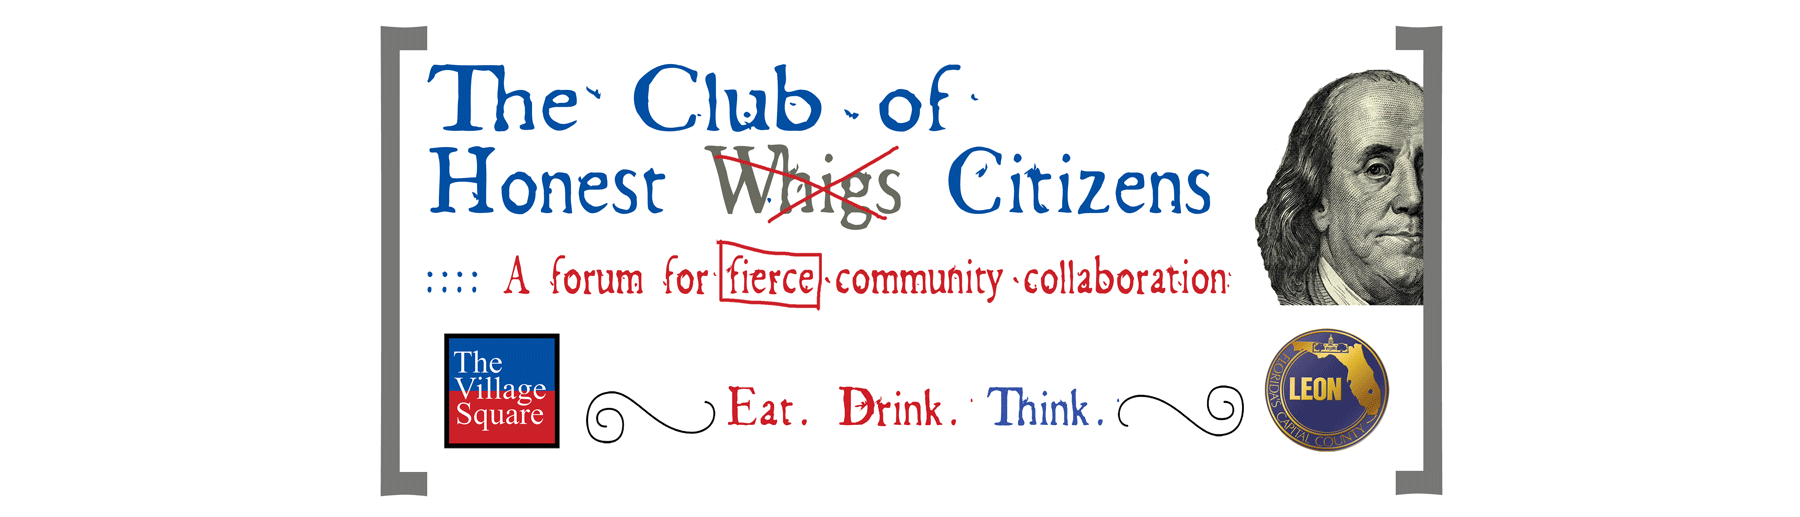 club-of-honest-citizens-banner